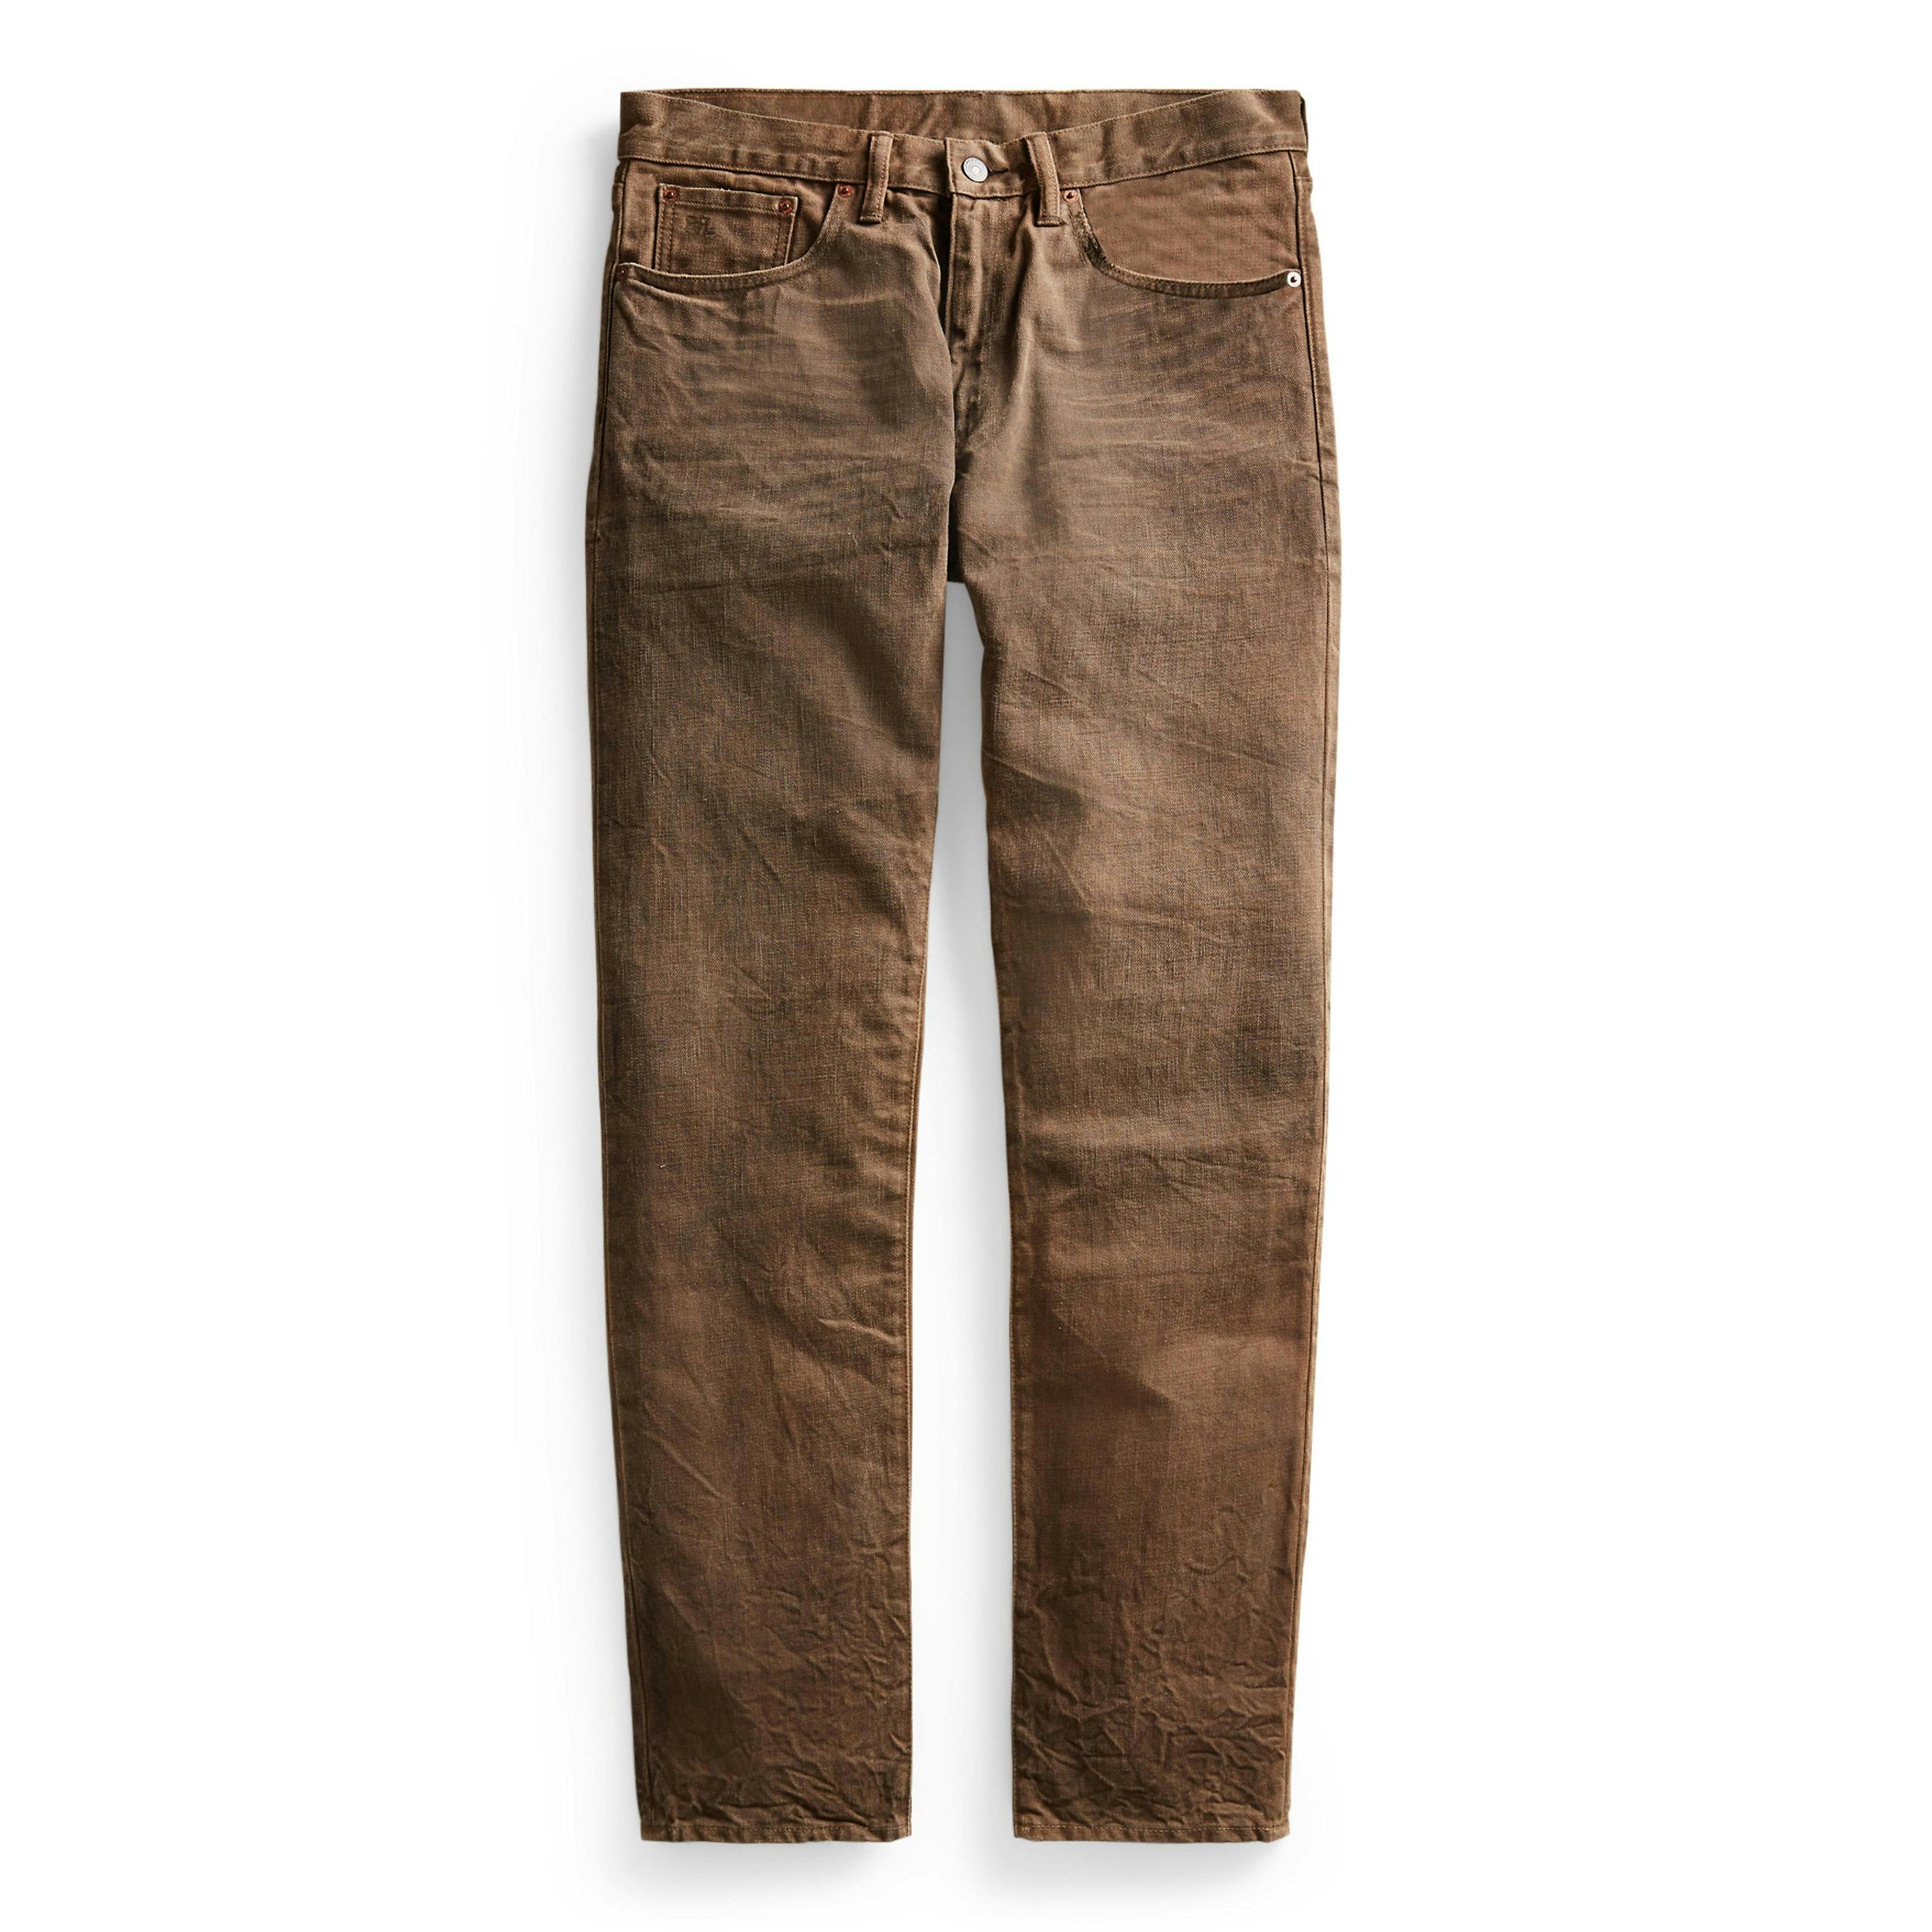 Huckberry | RRL Distressed - Jeans | Denim Fit Stretch Slim Wash Brown